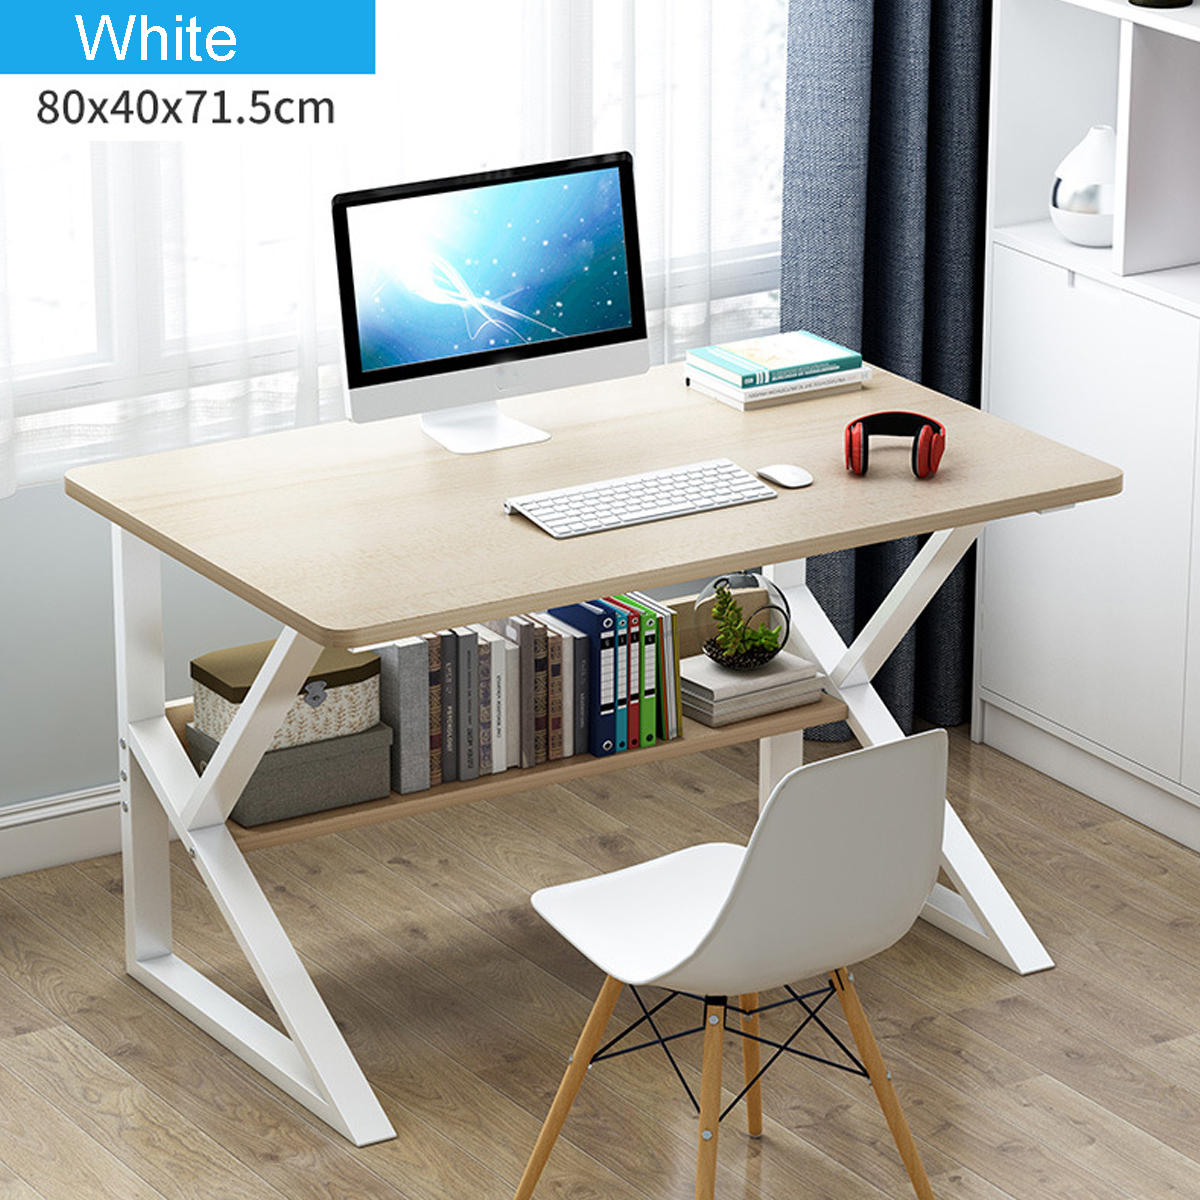 Wood Computer Desk Desktop Home Minimalist Modern Writing Desk Office Desk Study Table Desk Small Table,100 cm White White Rack,Widened Desktop Creative Corner Protector